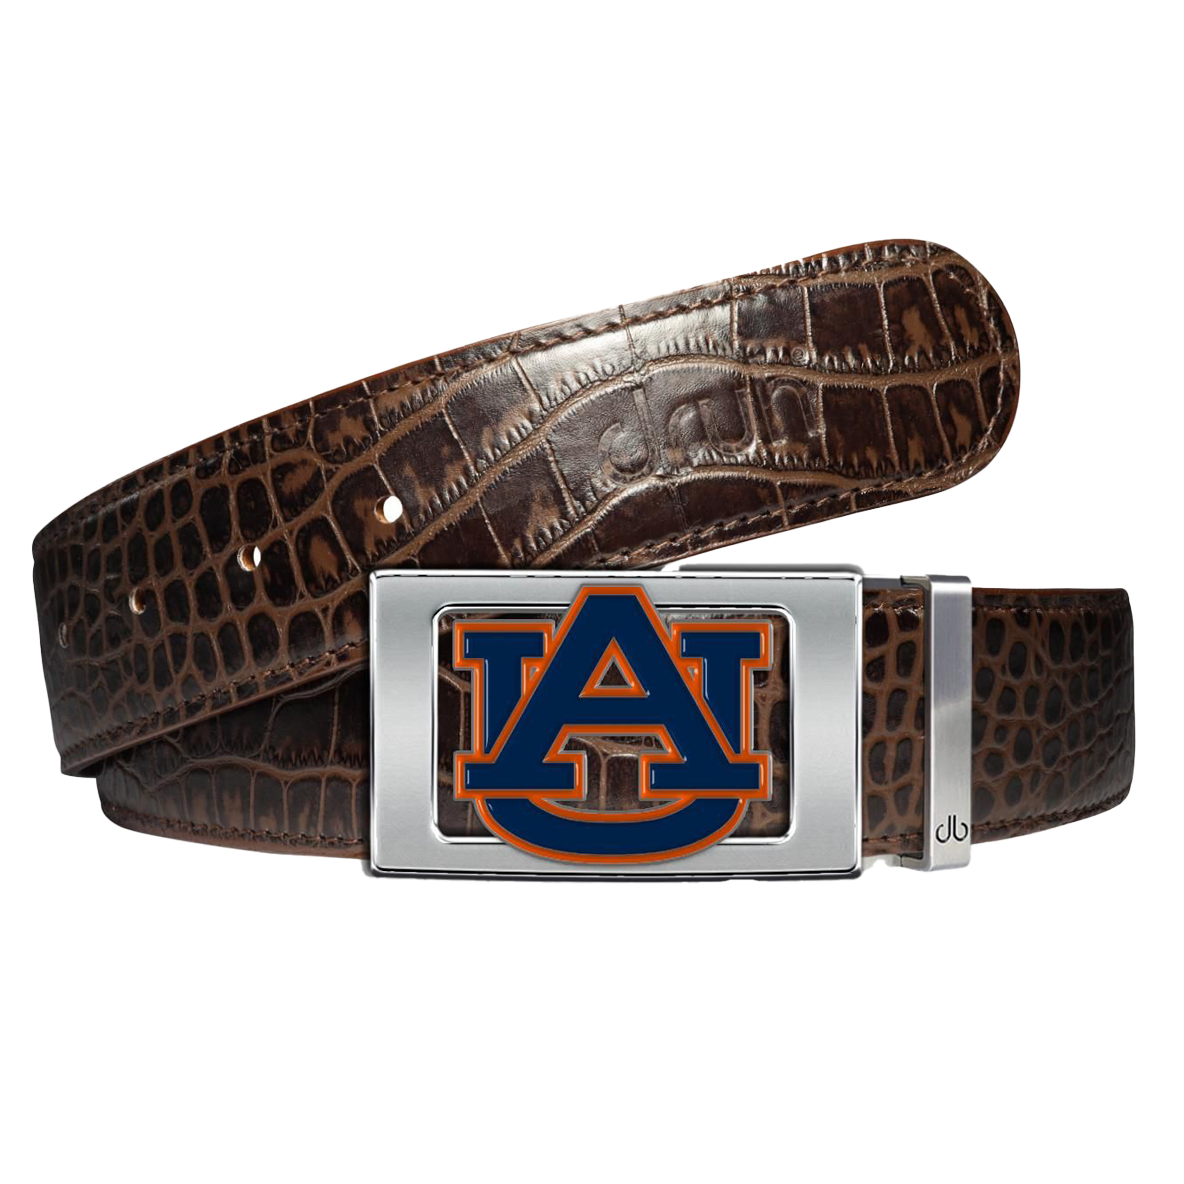 Auburn University Buckle with Brown Crocodile Leather Strap